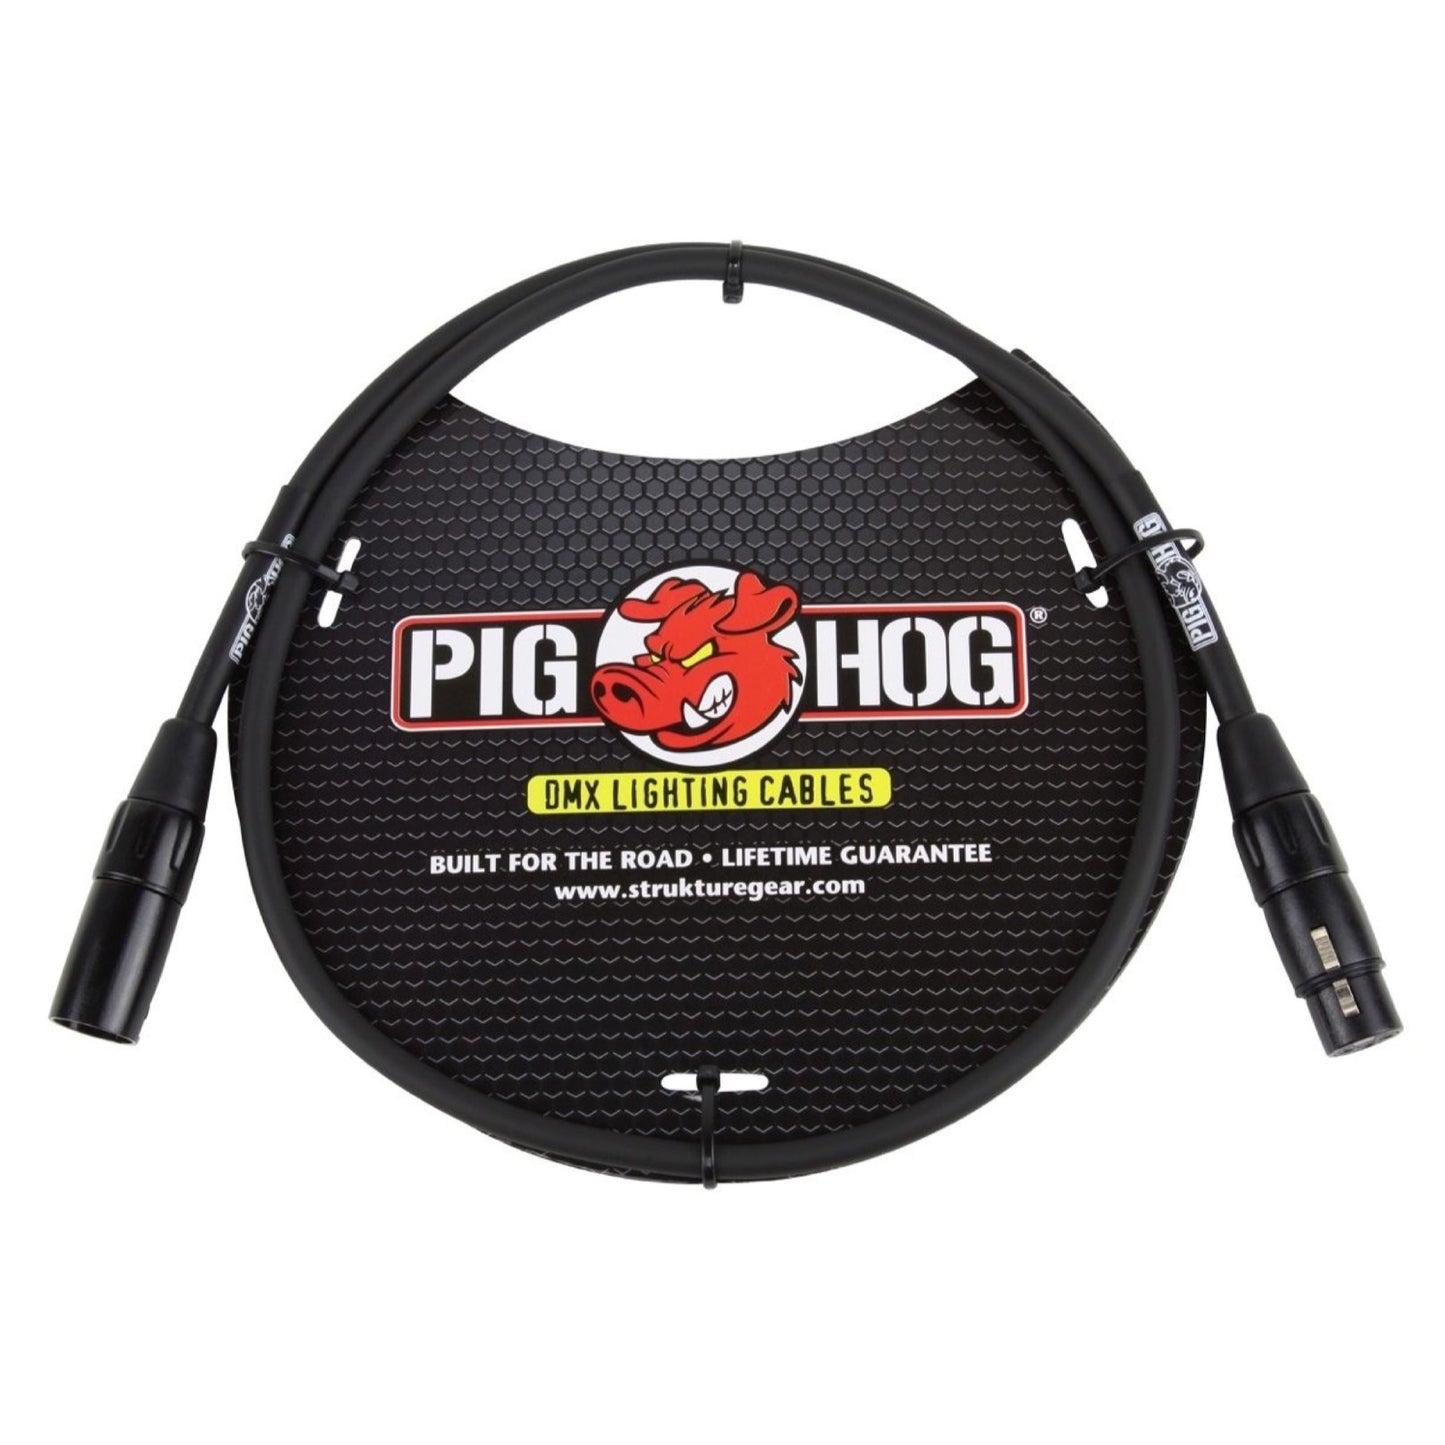 Pig Hog 3-Pin DMX Lighting Cable, 3 Foot